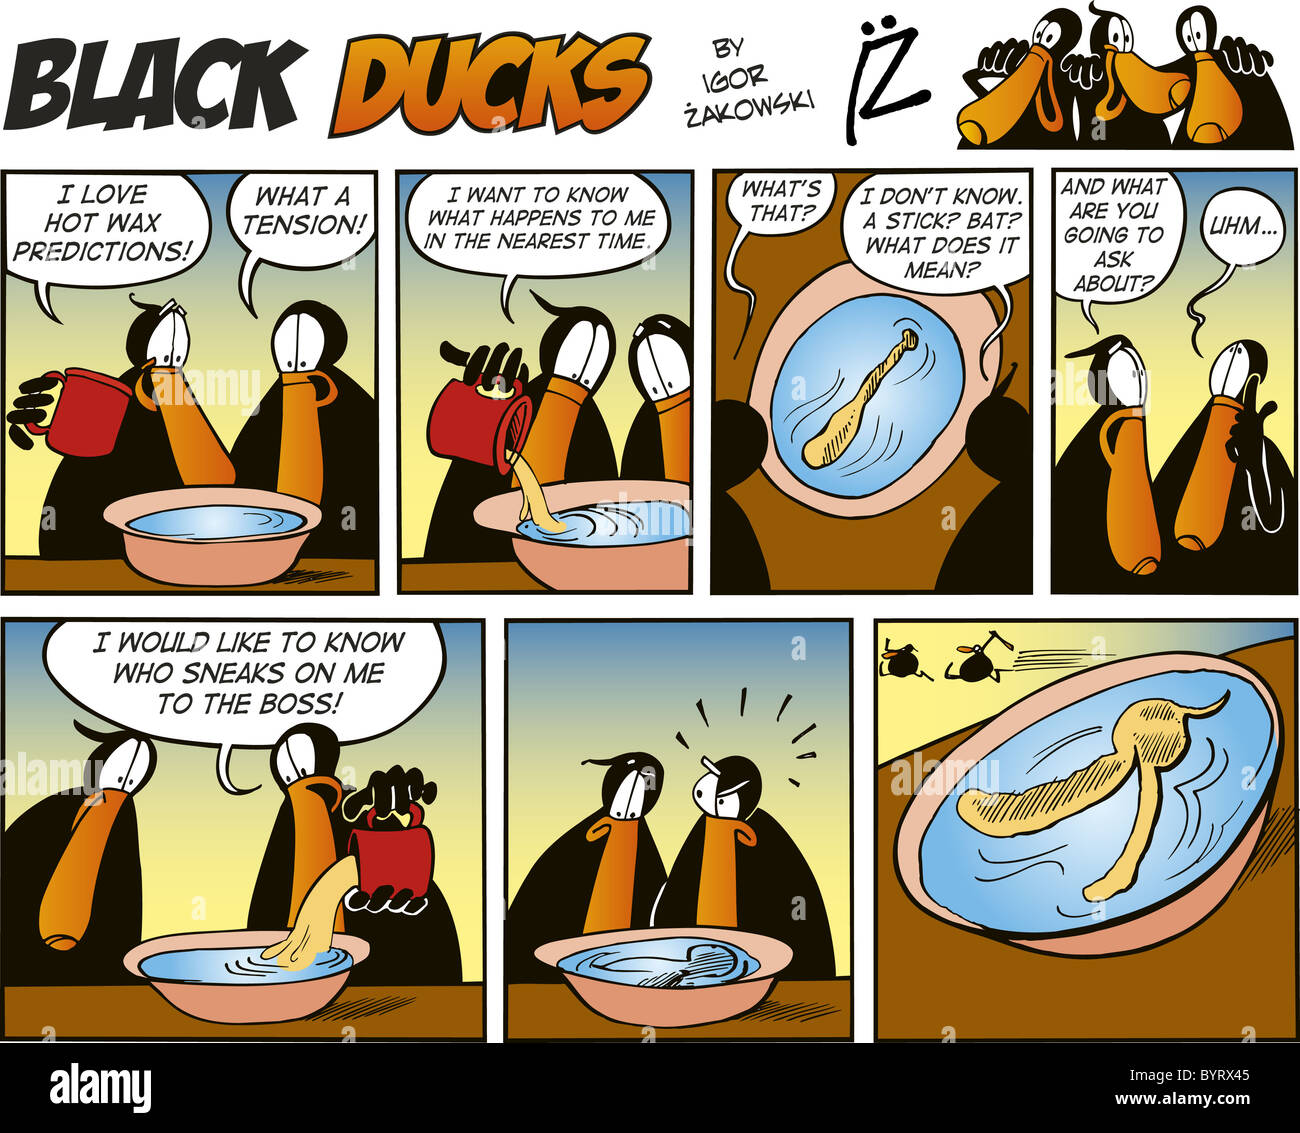 Black Ducks Comic Strip episode 20 Stock Photo